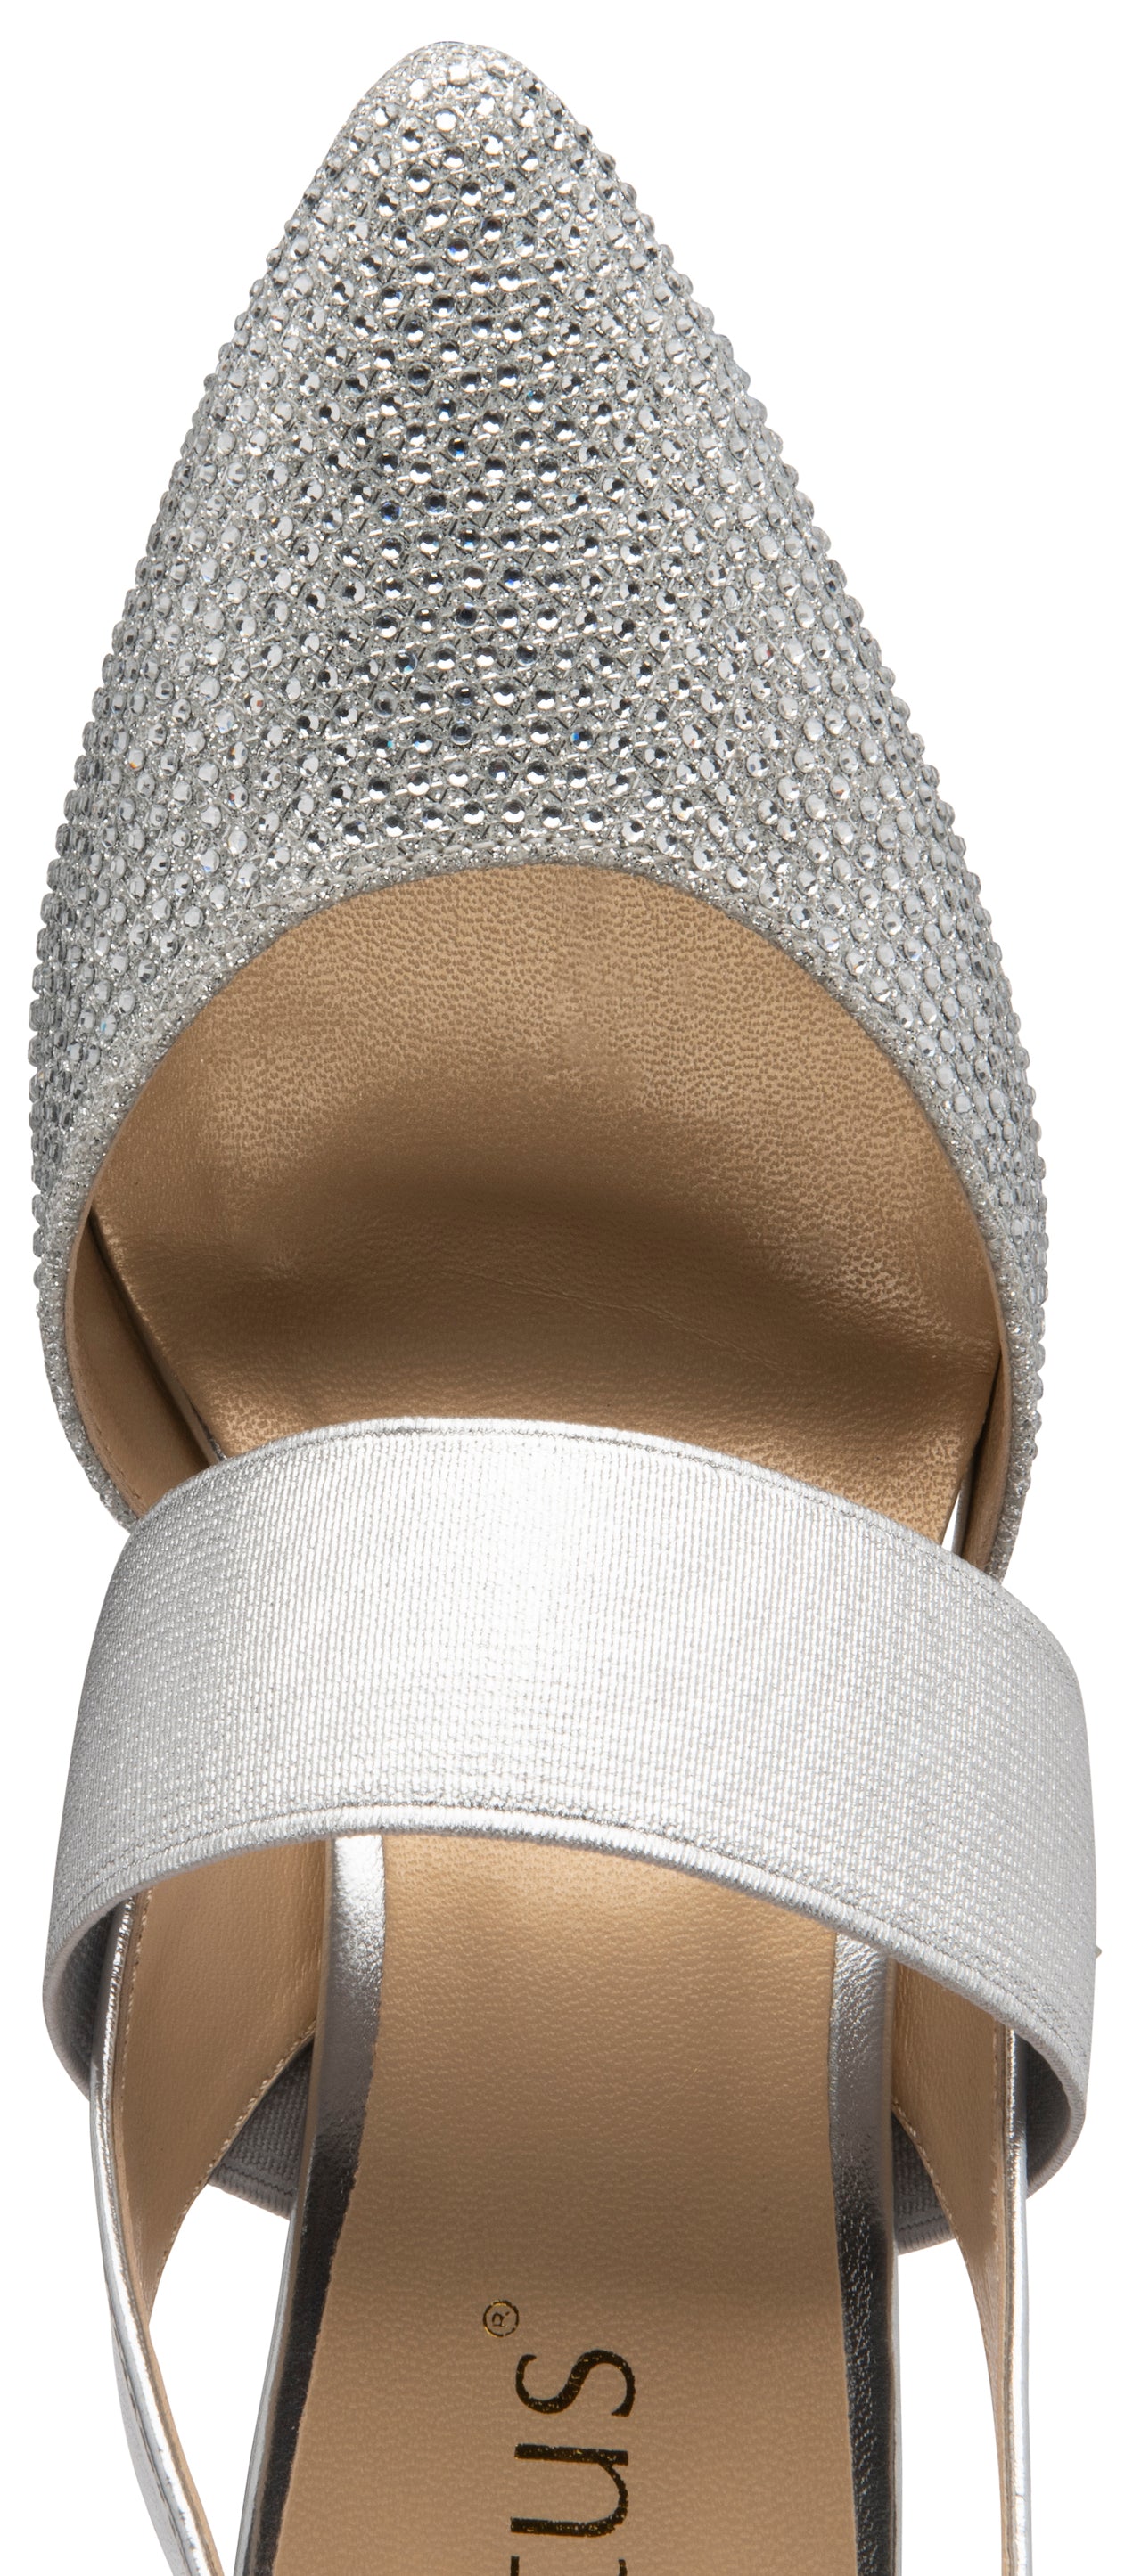 Lotus Joie ULS349 Ladies Silver Diamante Textile Buckle Heels